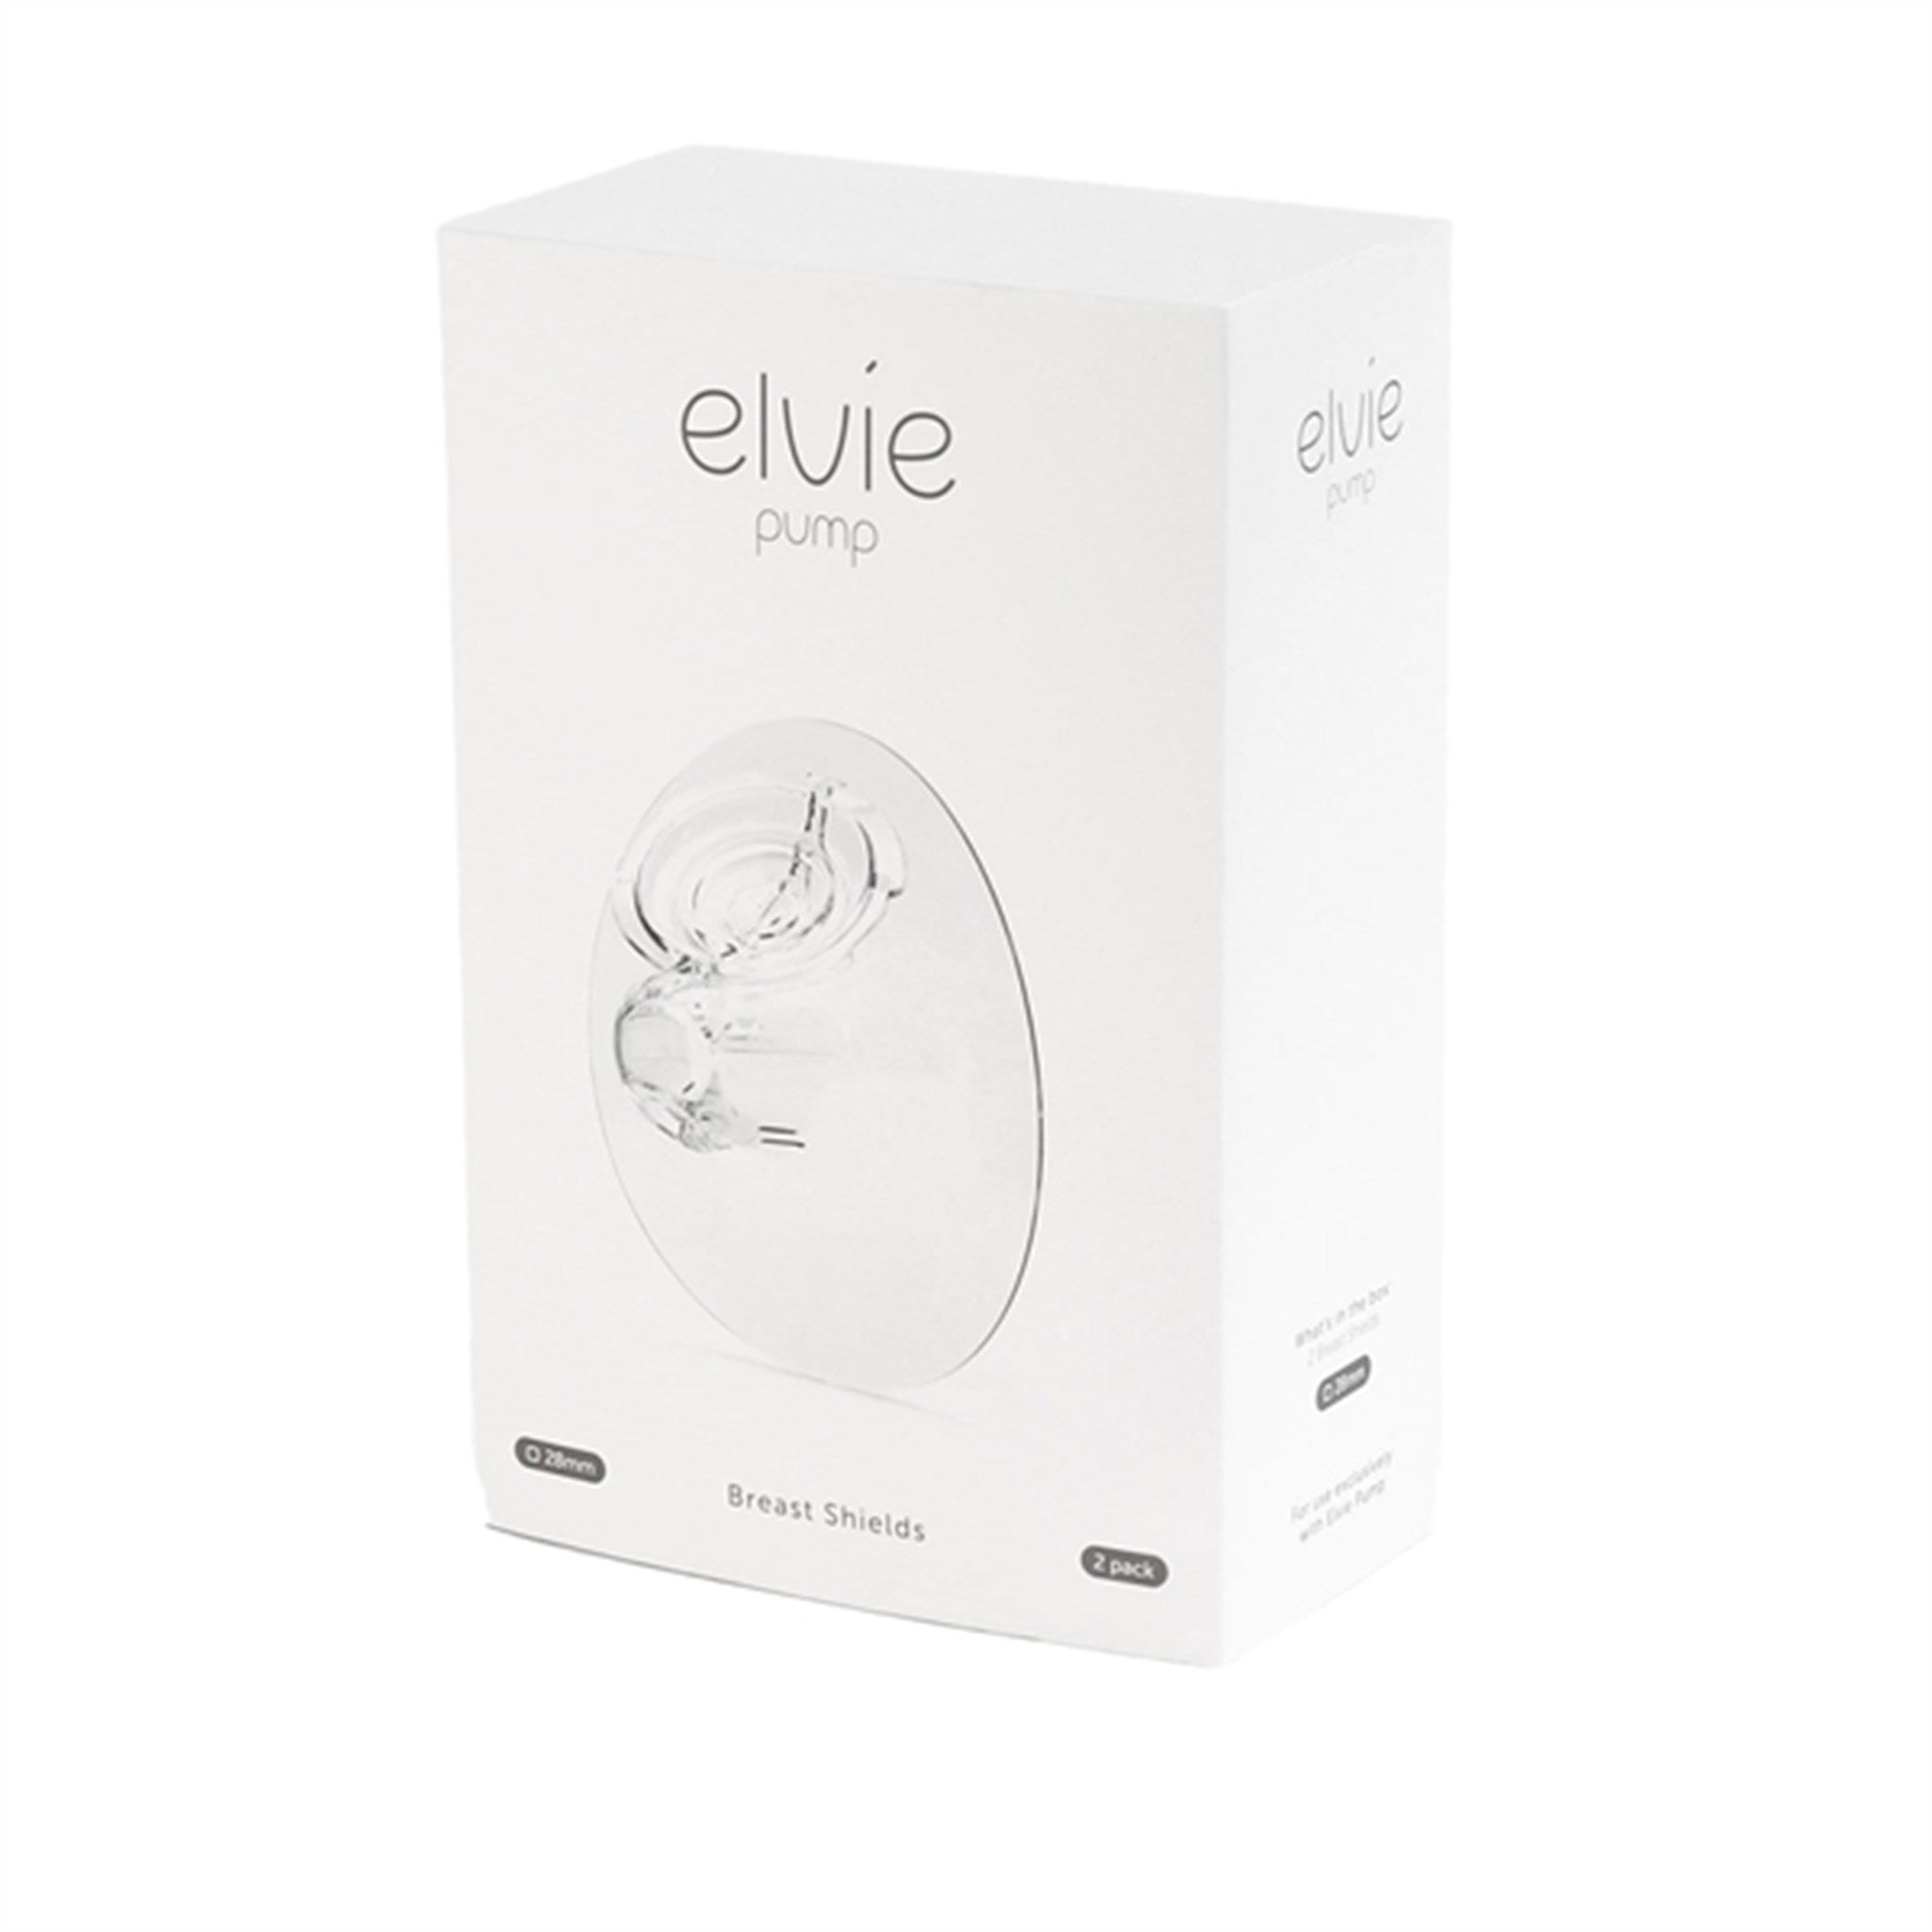 Elvie Breast Shield 28 mm 2-Pack White 2